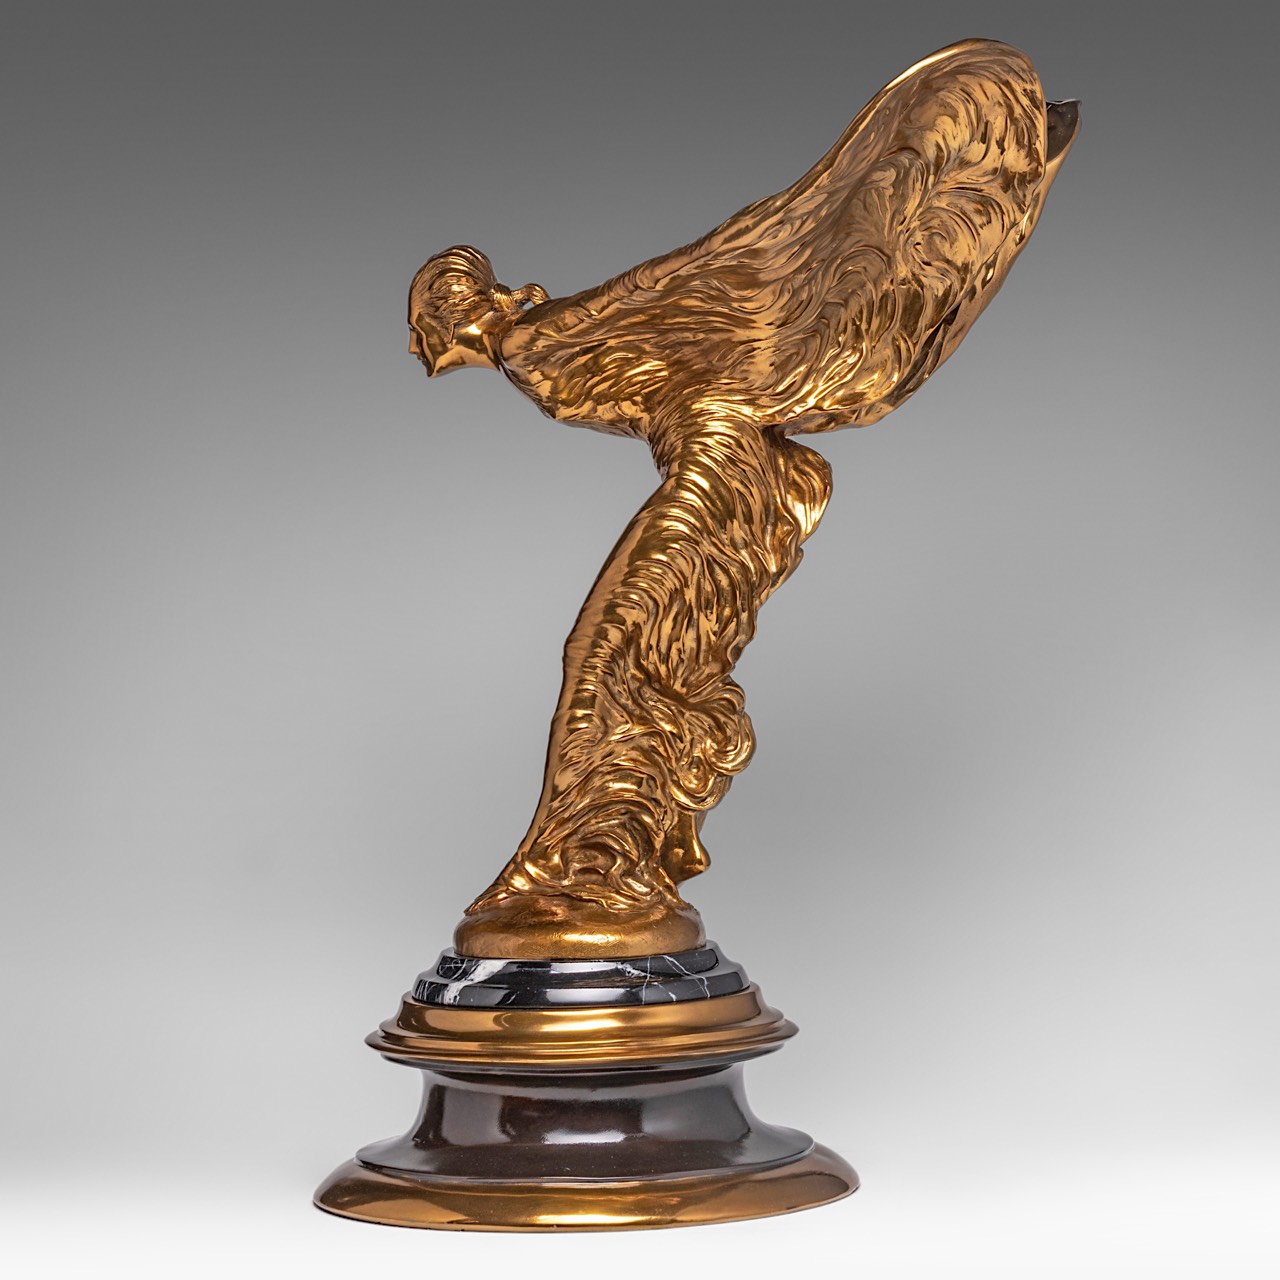 Charles Sykes (1875-1950), gilt bronze sculpture of the 'Spirit of Ecstasy', Rolls-Royce, H 69 cm - Image 5 of 7